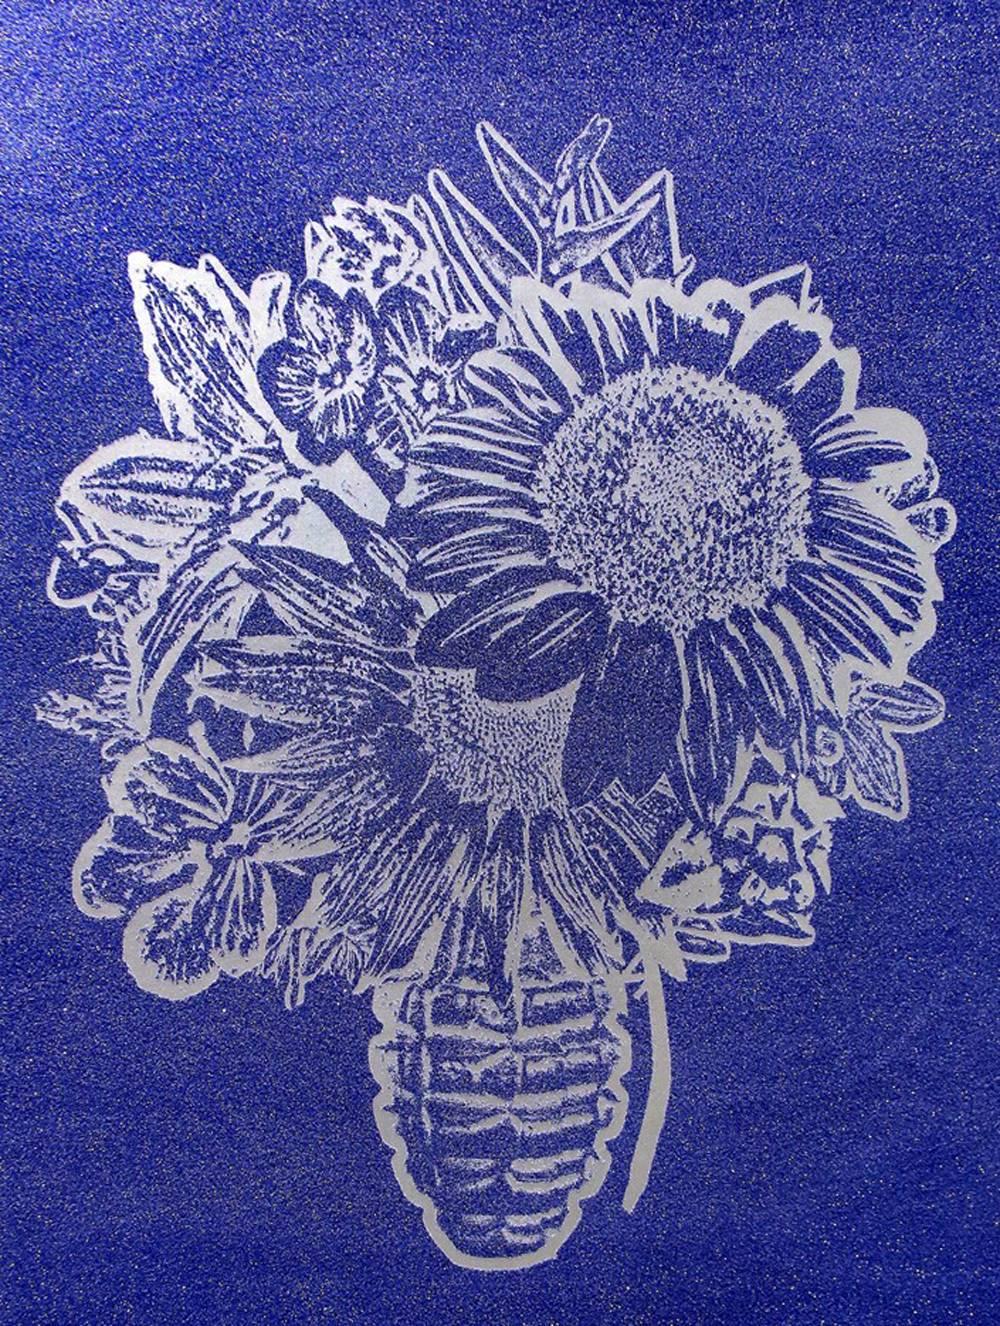 Flower Vase Silver on Blue - Mixed Media Art by Rubem Robierb